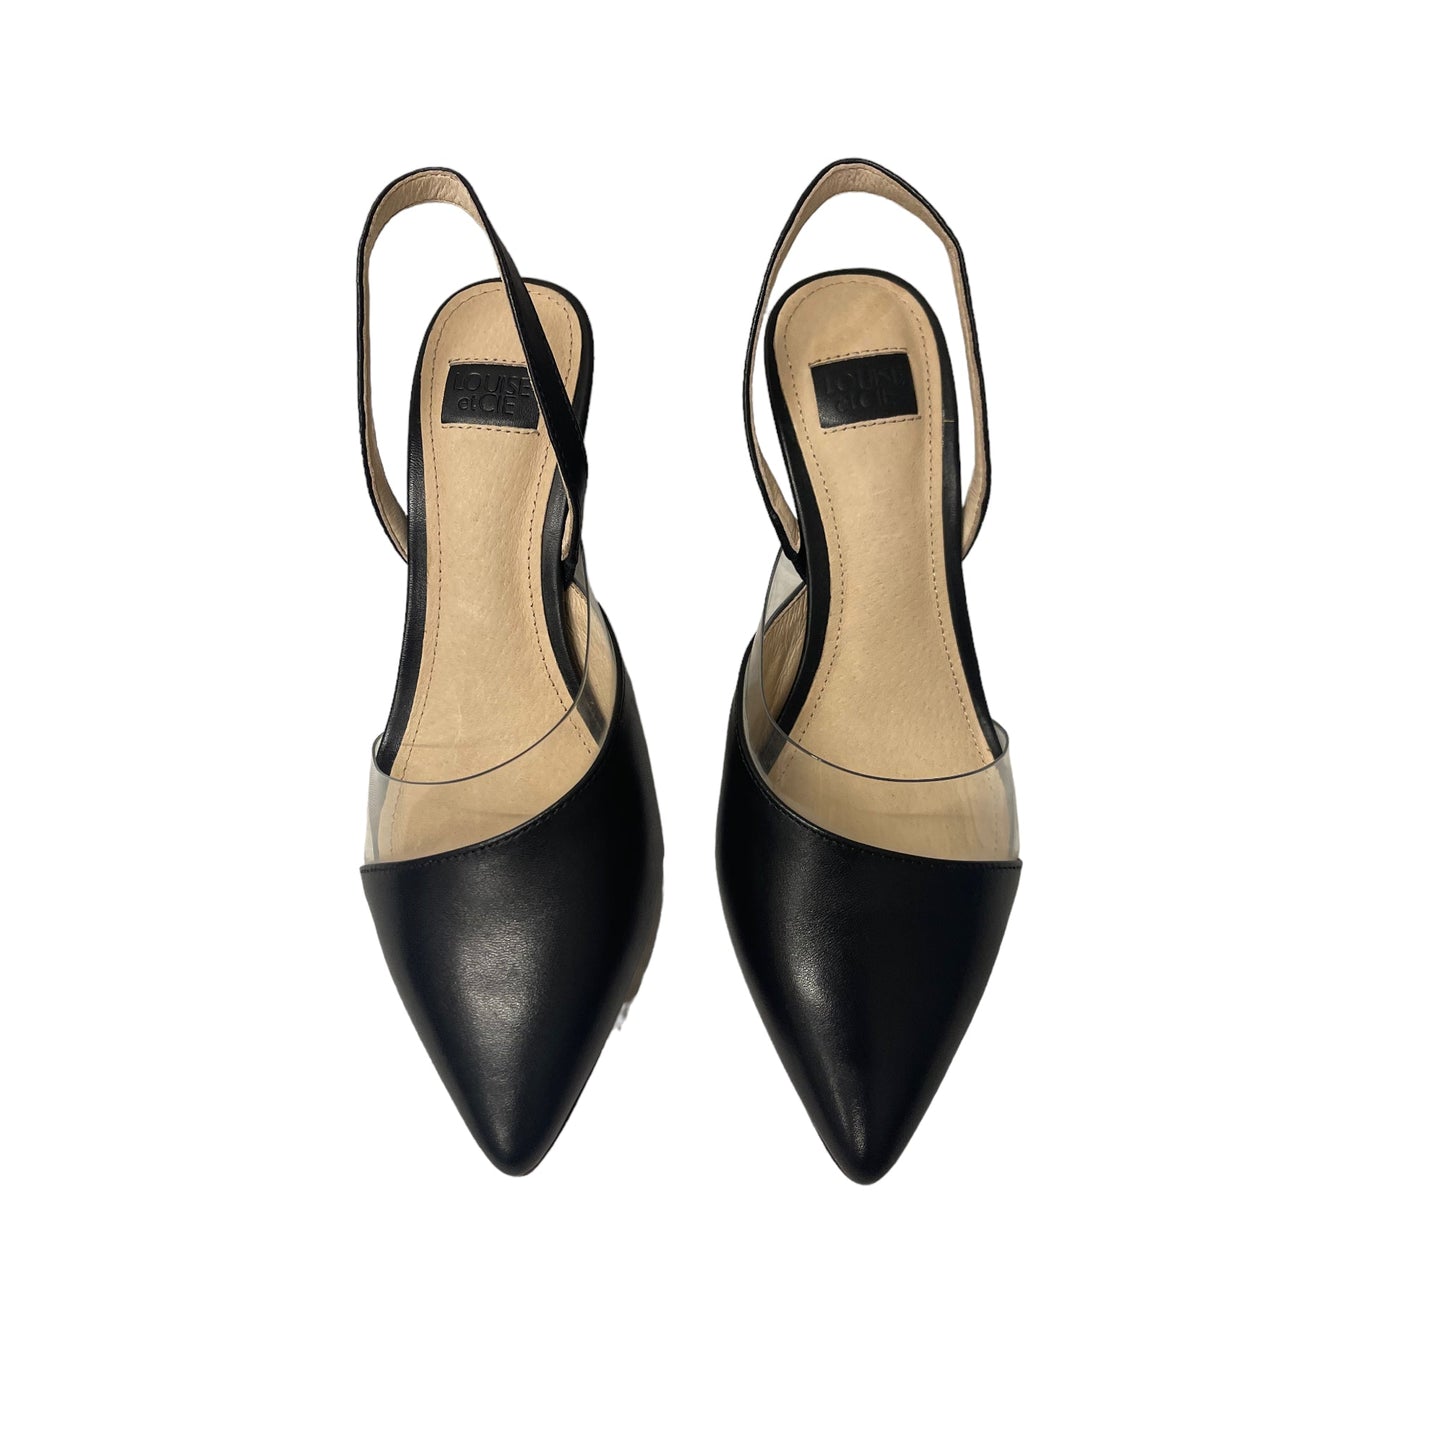 Shoes Heels Stiletto By Louise Et Cie  Size: 6.5